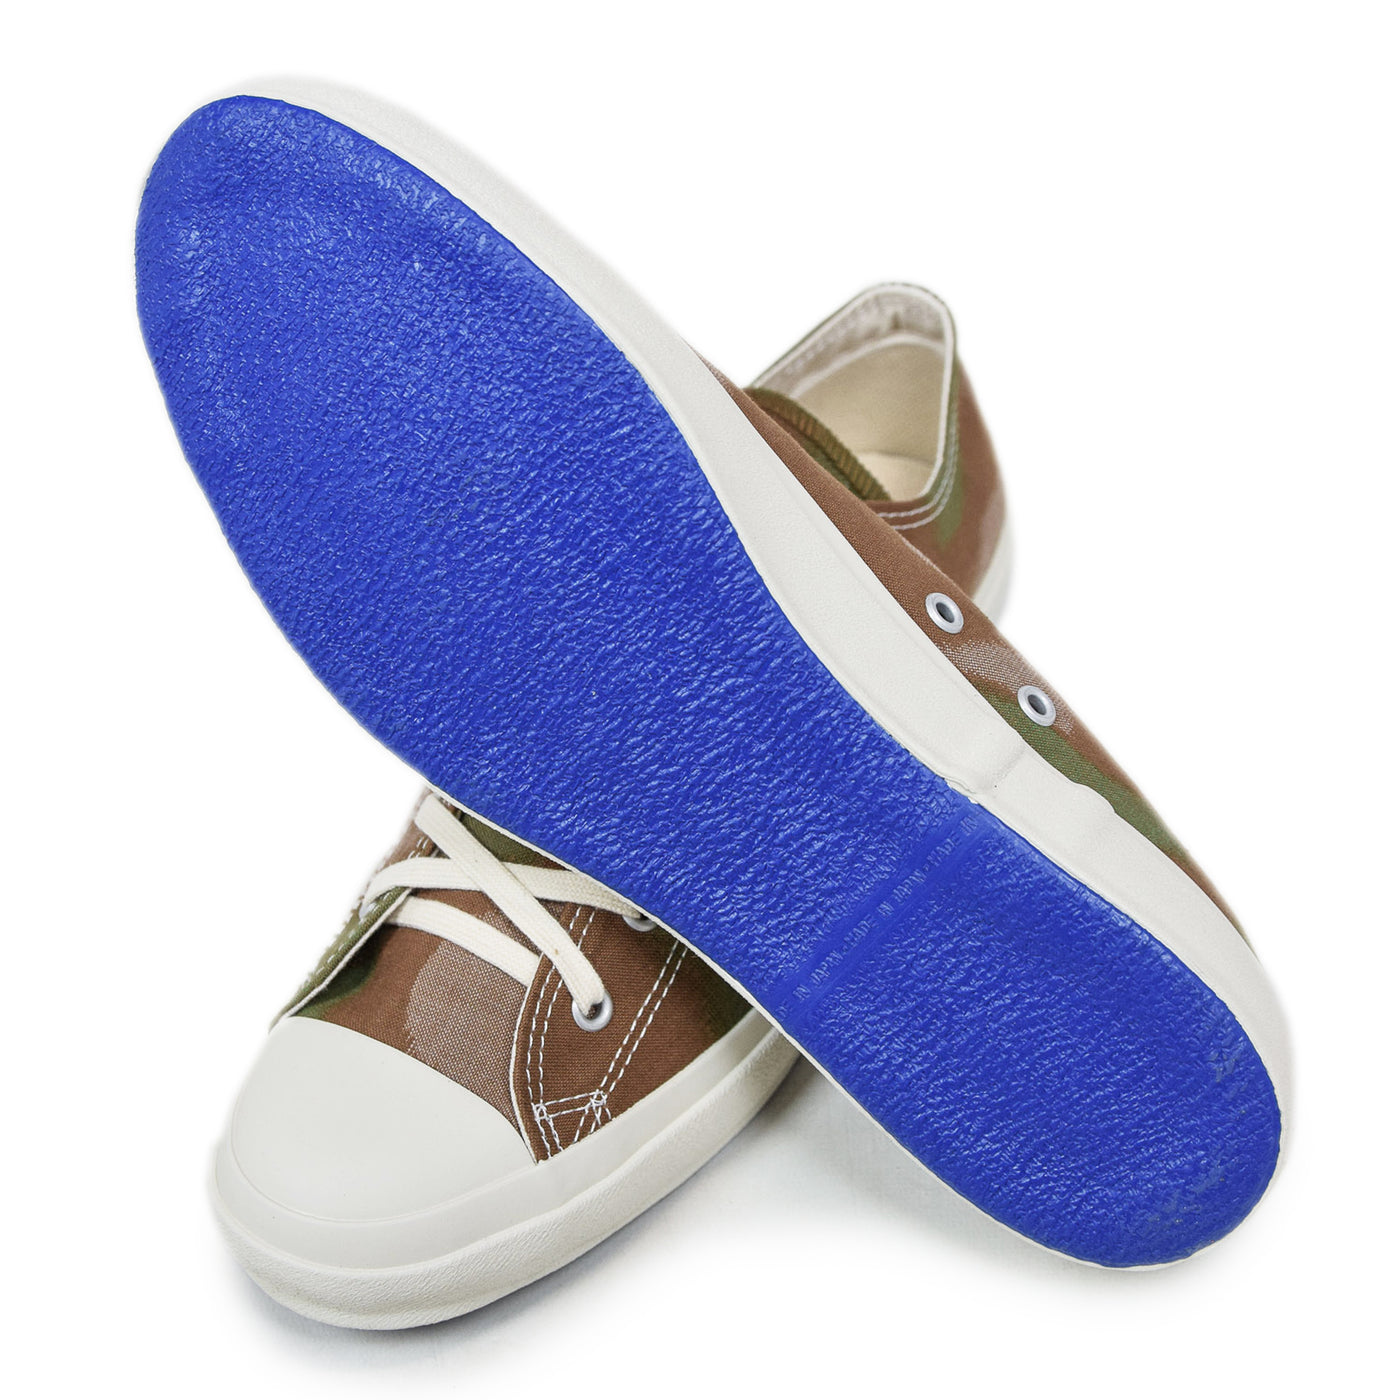 Moonstar Vulcanised Low Basket Camo Shoe Made In Japan sole